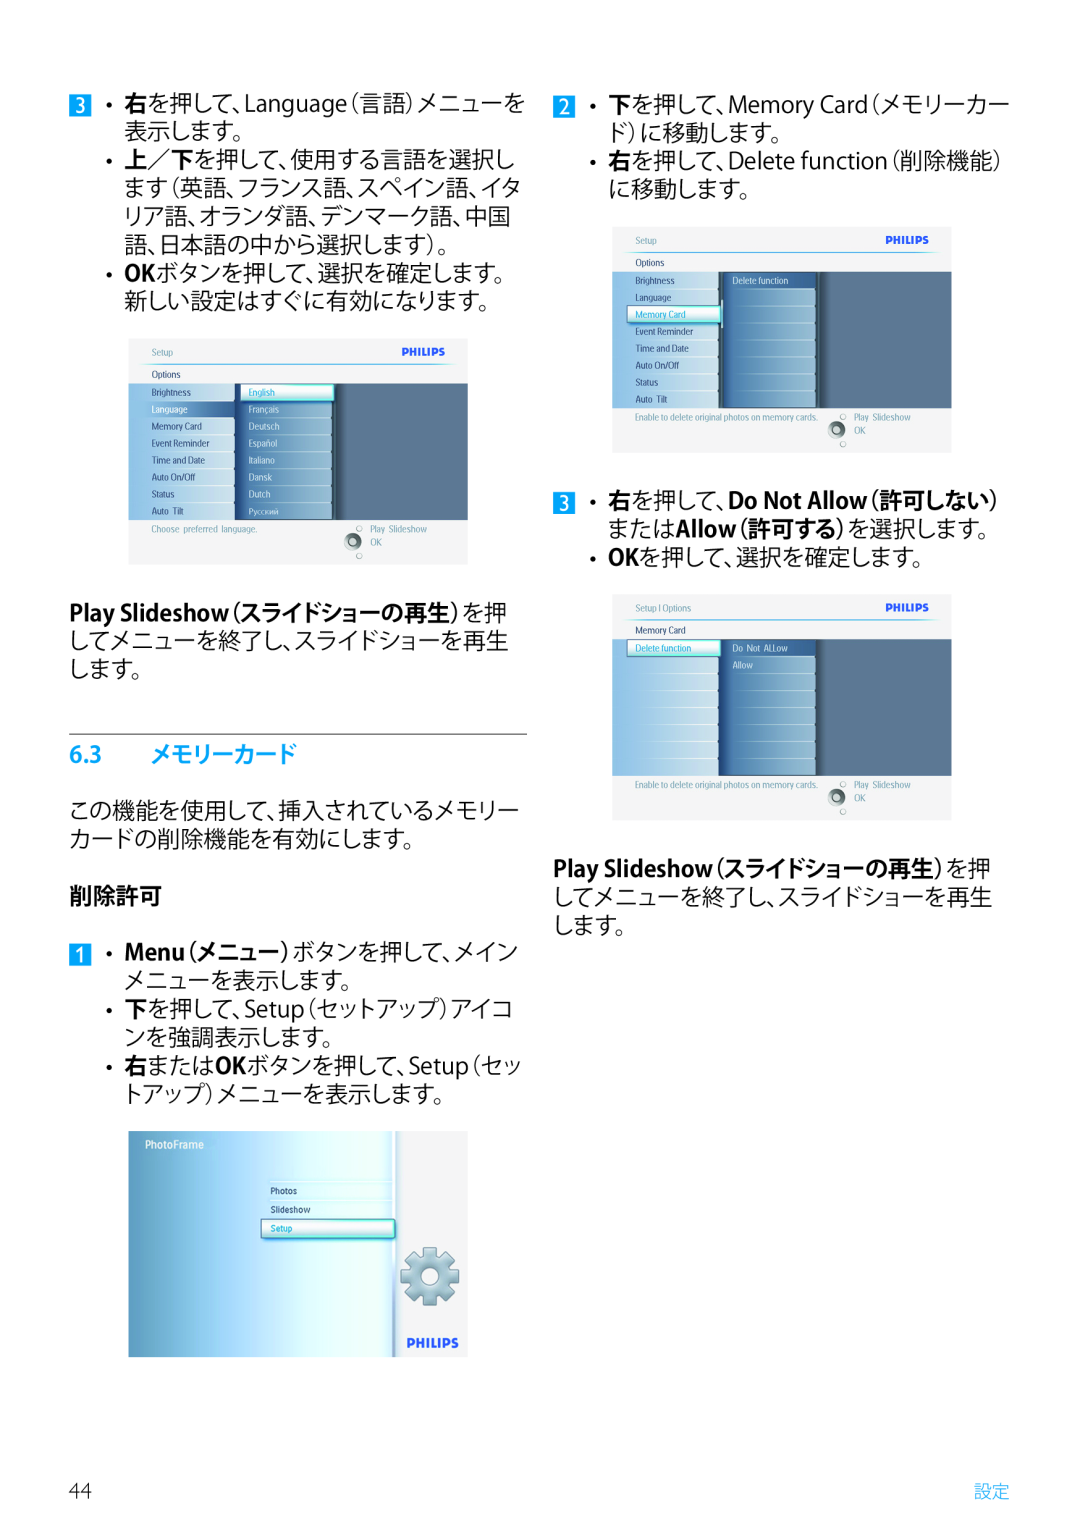 Philips 7FF2, 5FF2, 10FF2 manual 6.3 メモリーカード, 削除許可 